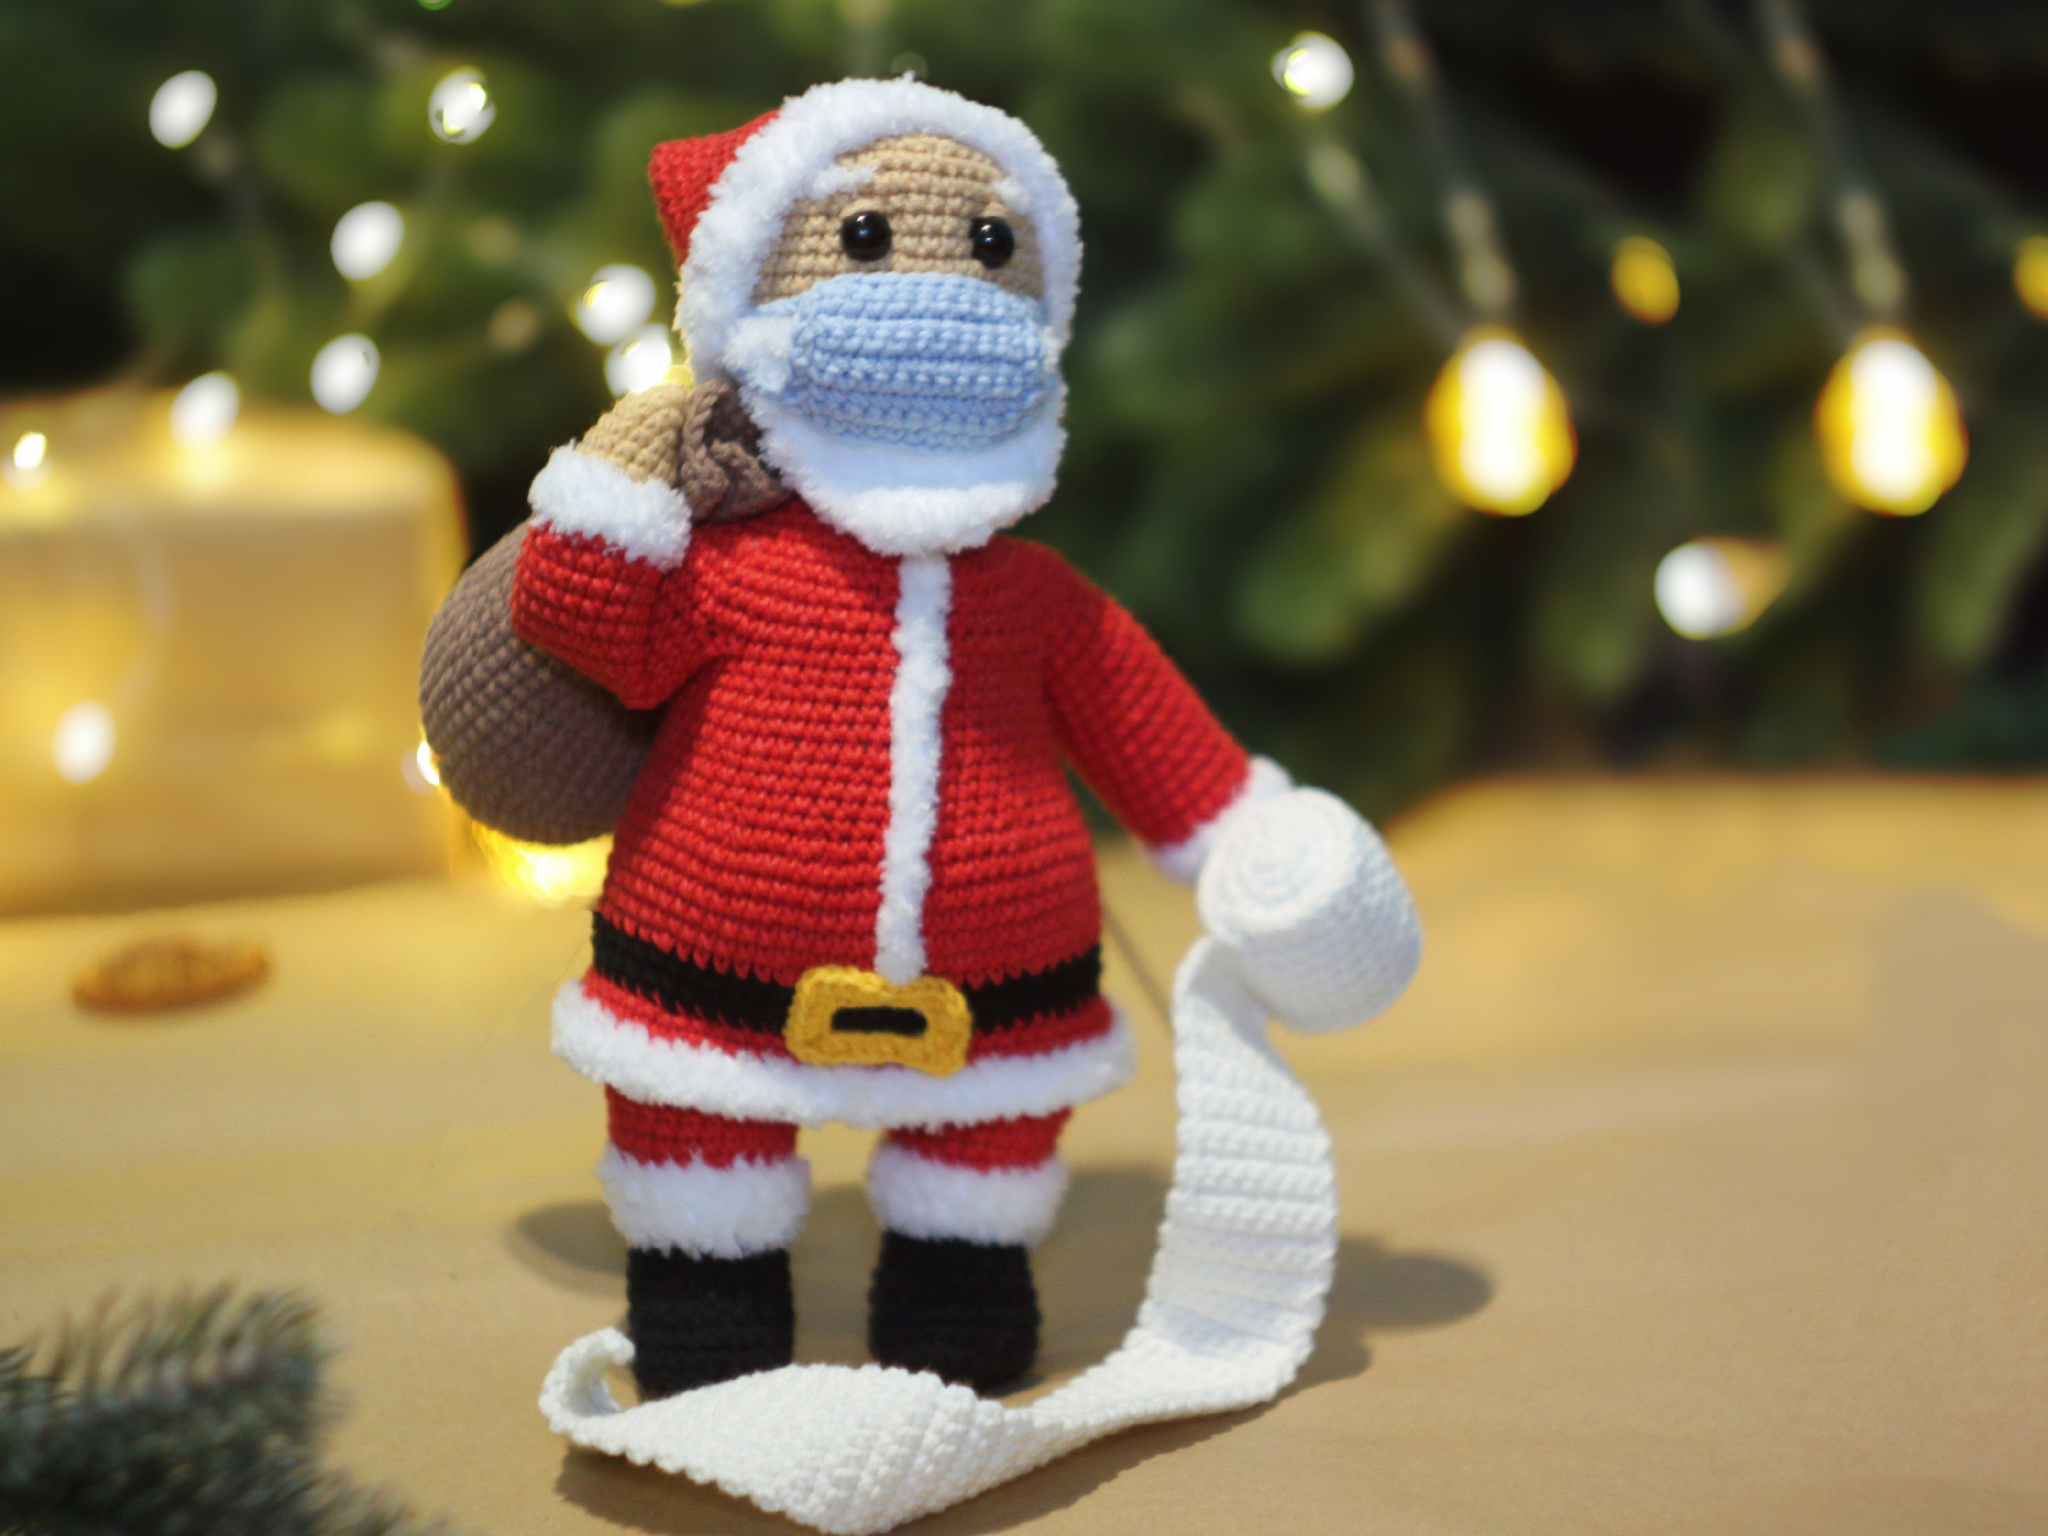 Crochet patterns Christmas amigurumi Pandemic Santa PDF / Instant Download tutorial